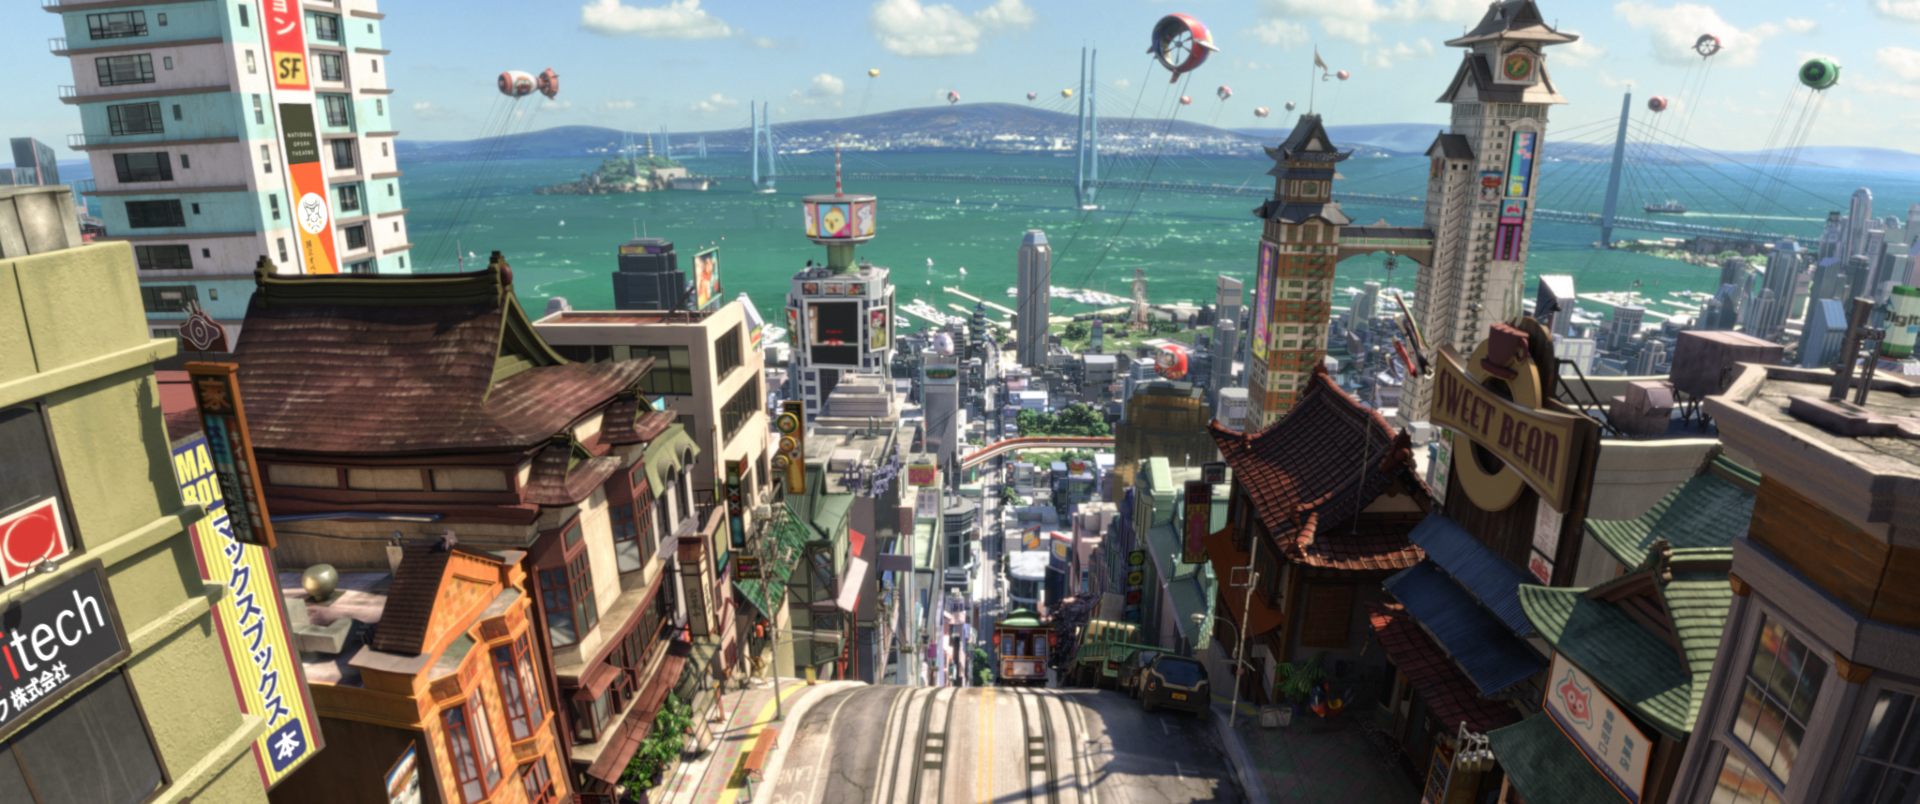 A Tour Of ‘San Fransokyo’, The Hybrid City Disney Built For Big Hero 6